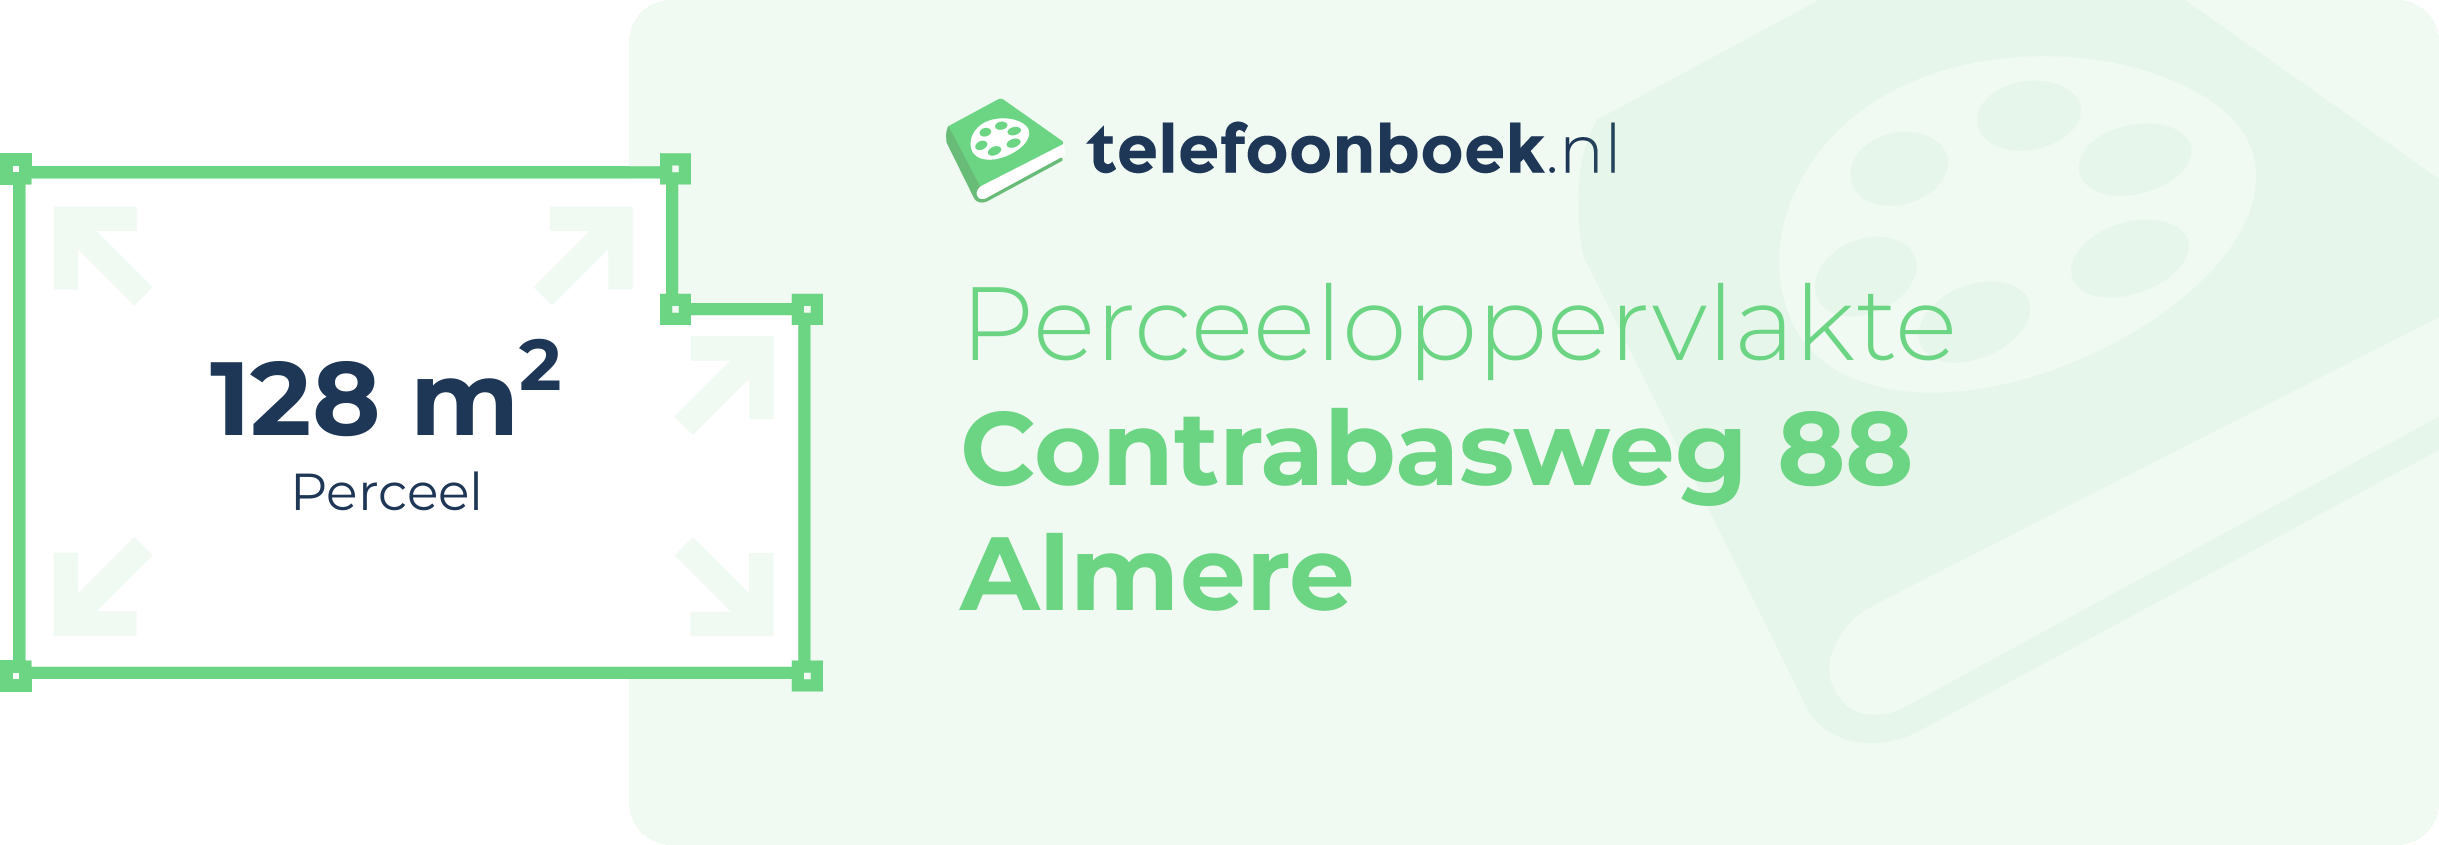 Perceeloppervlakte Contrabasweg 88 Almere